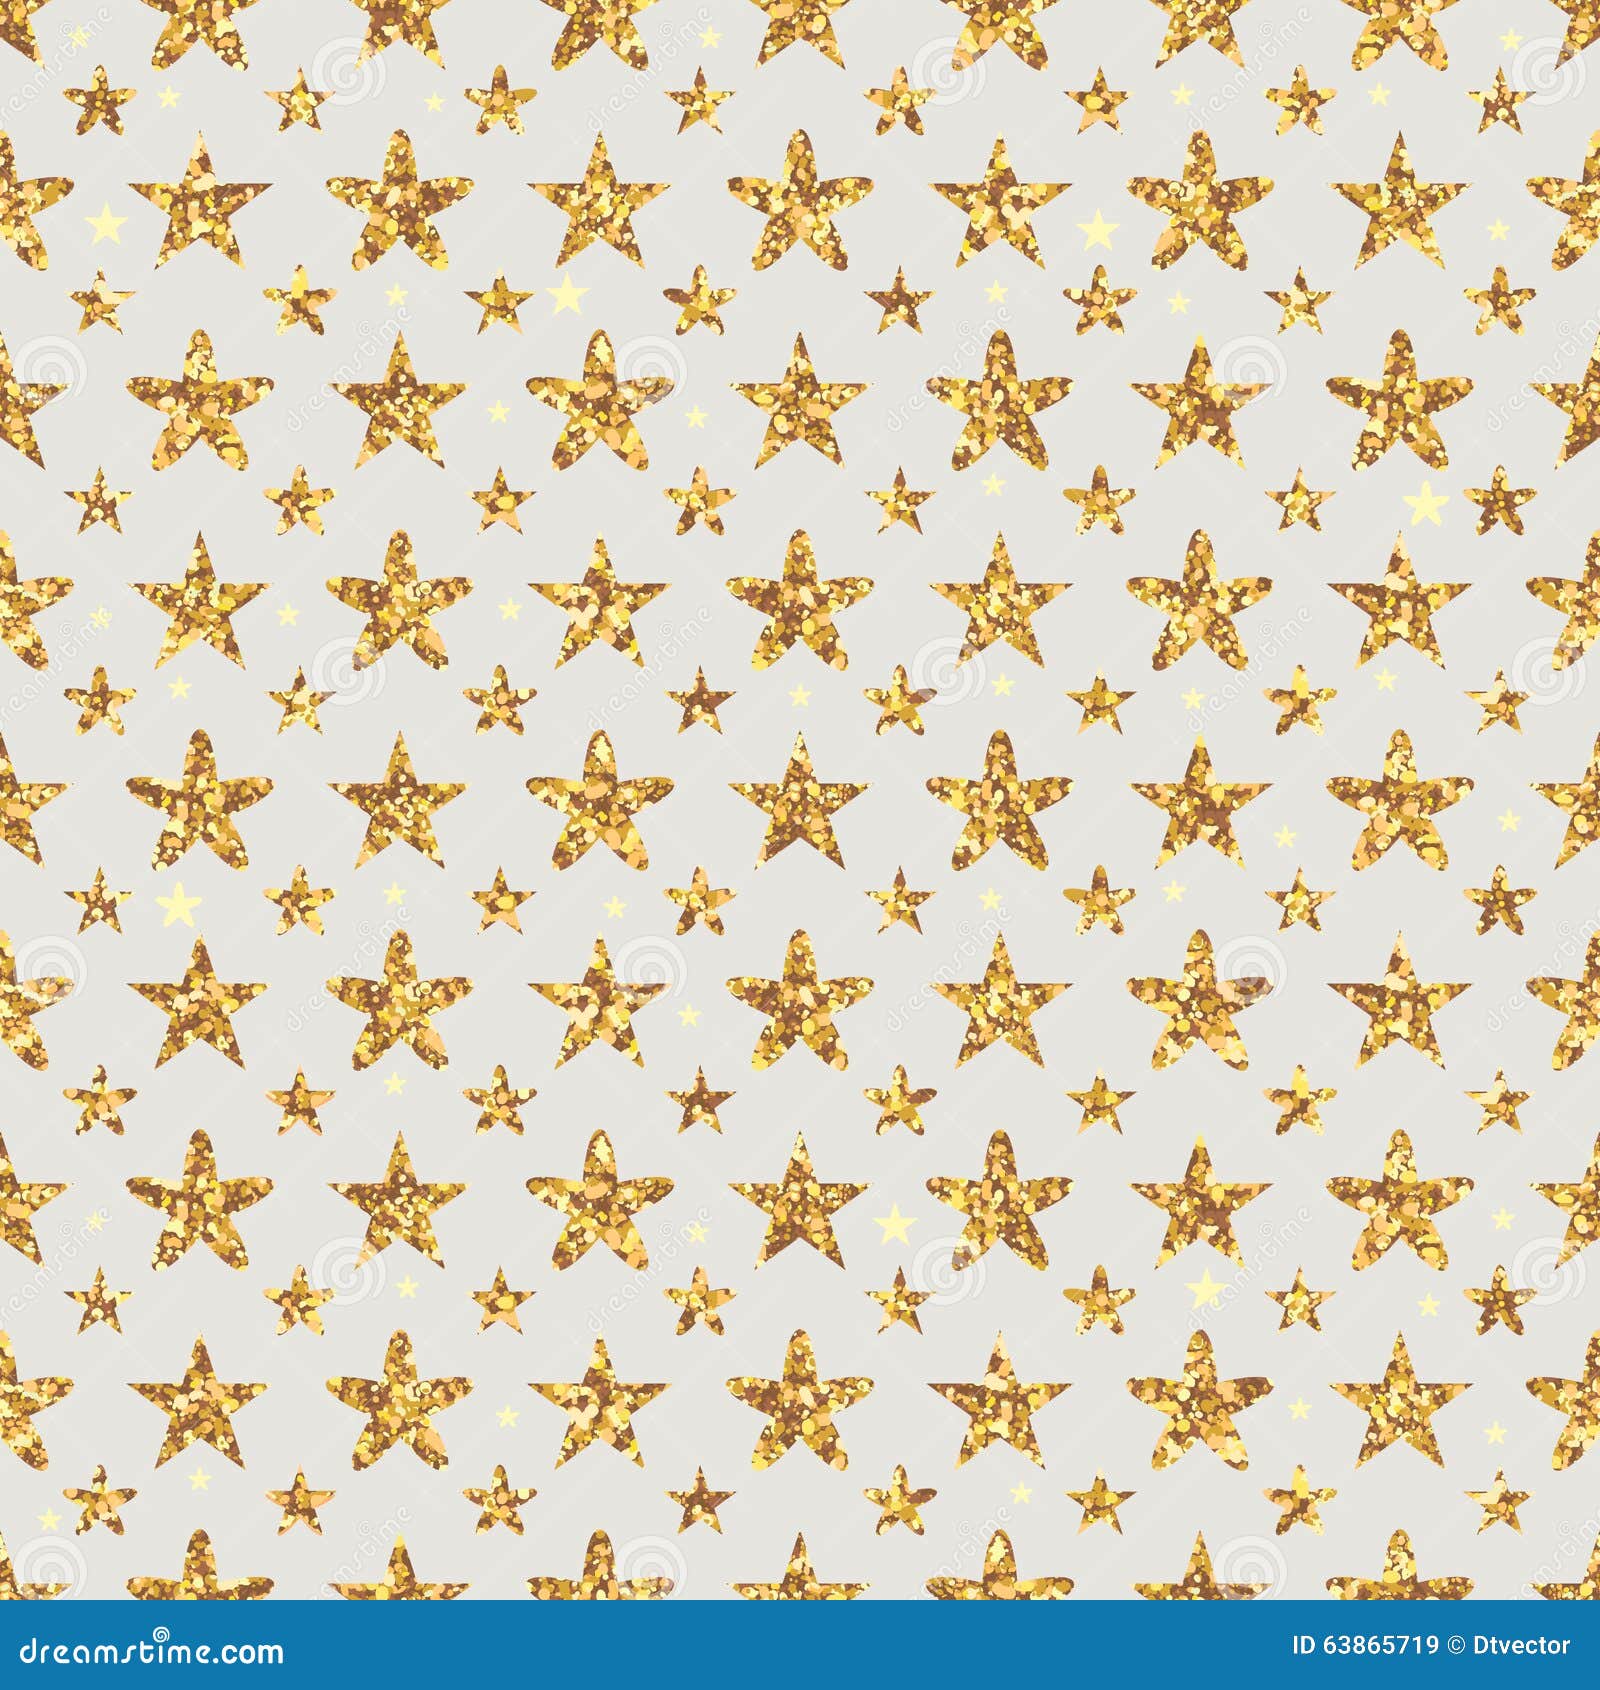 golden glitter star flower symmetry seamless pattern